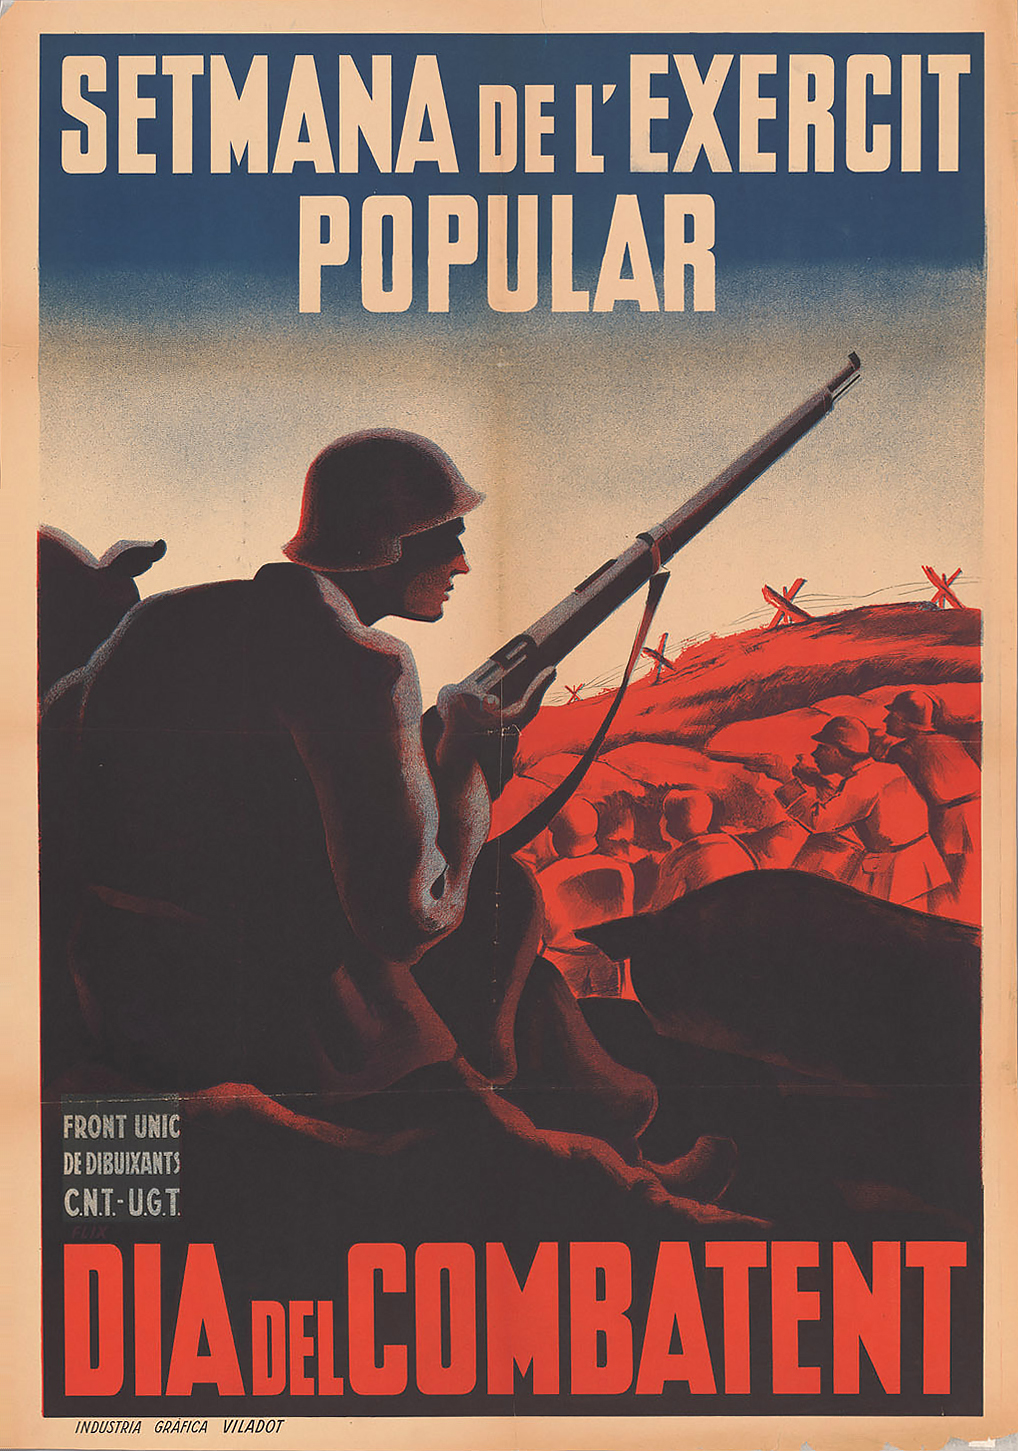 Spanish War Poster, courtesy Bancroft Library